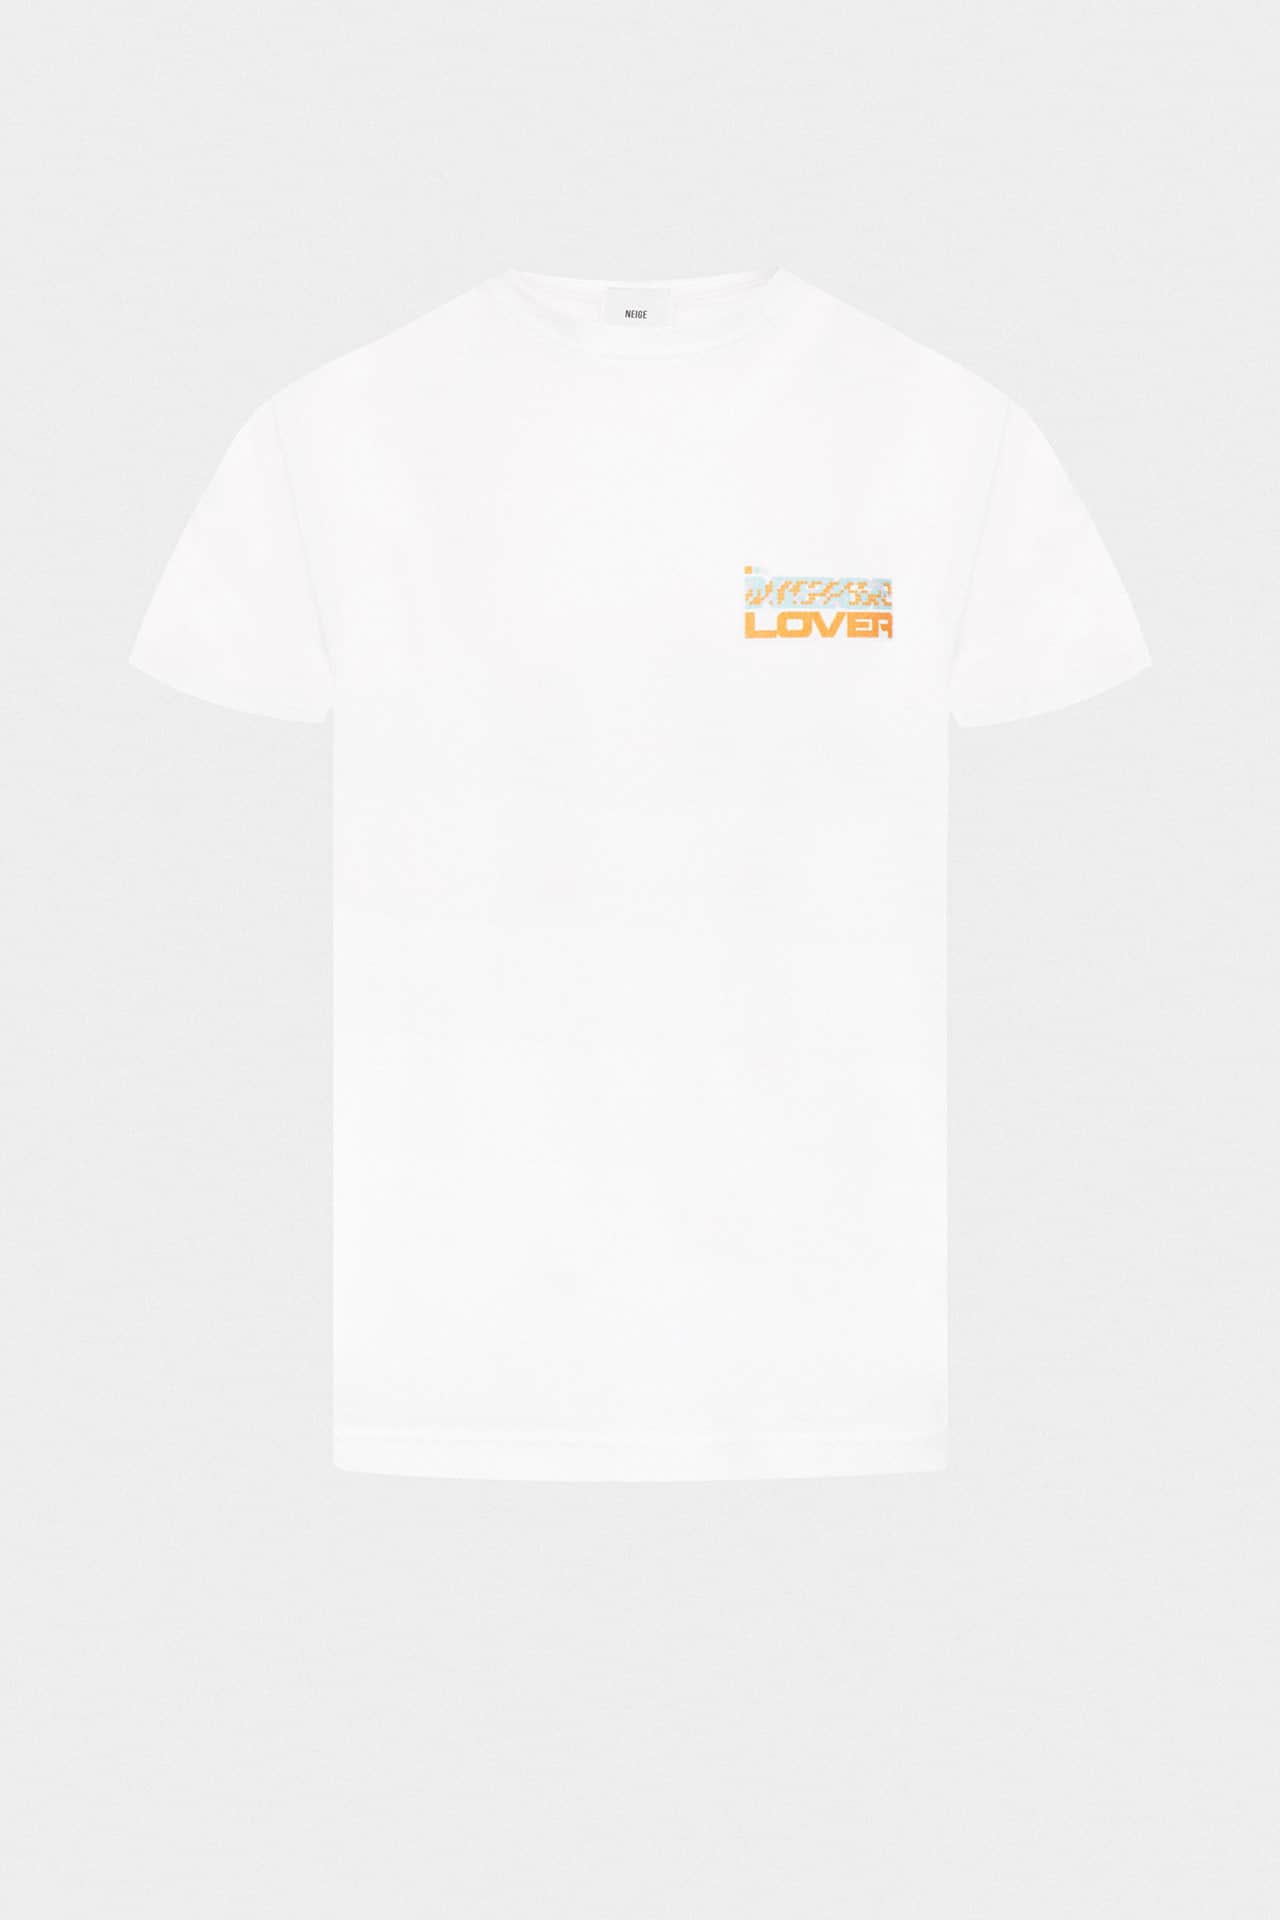 Weekend Lover T-shirt White Neige Spring / Summer 22